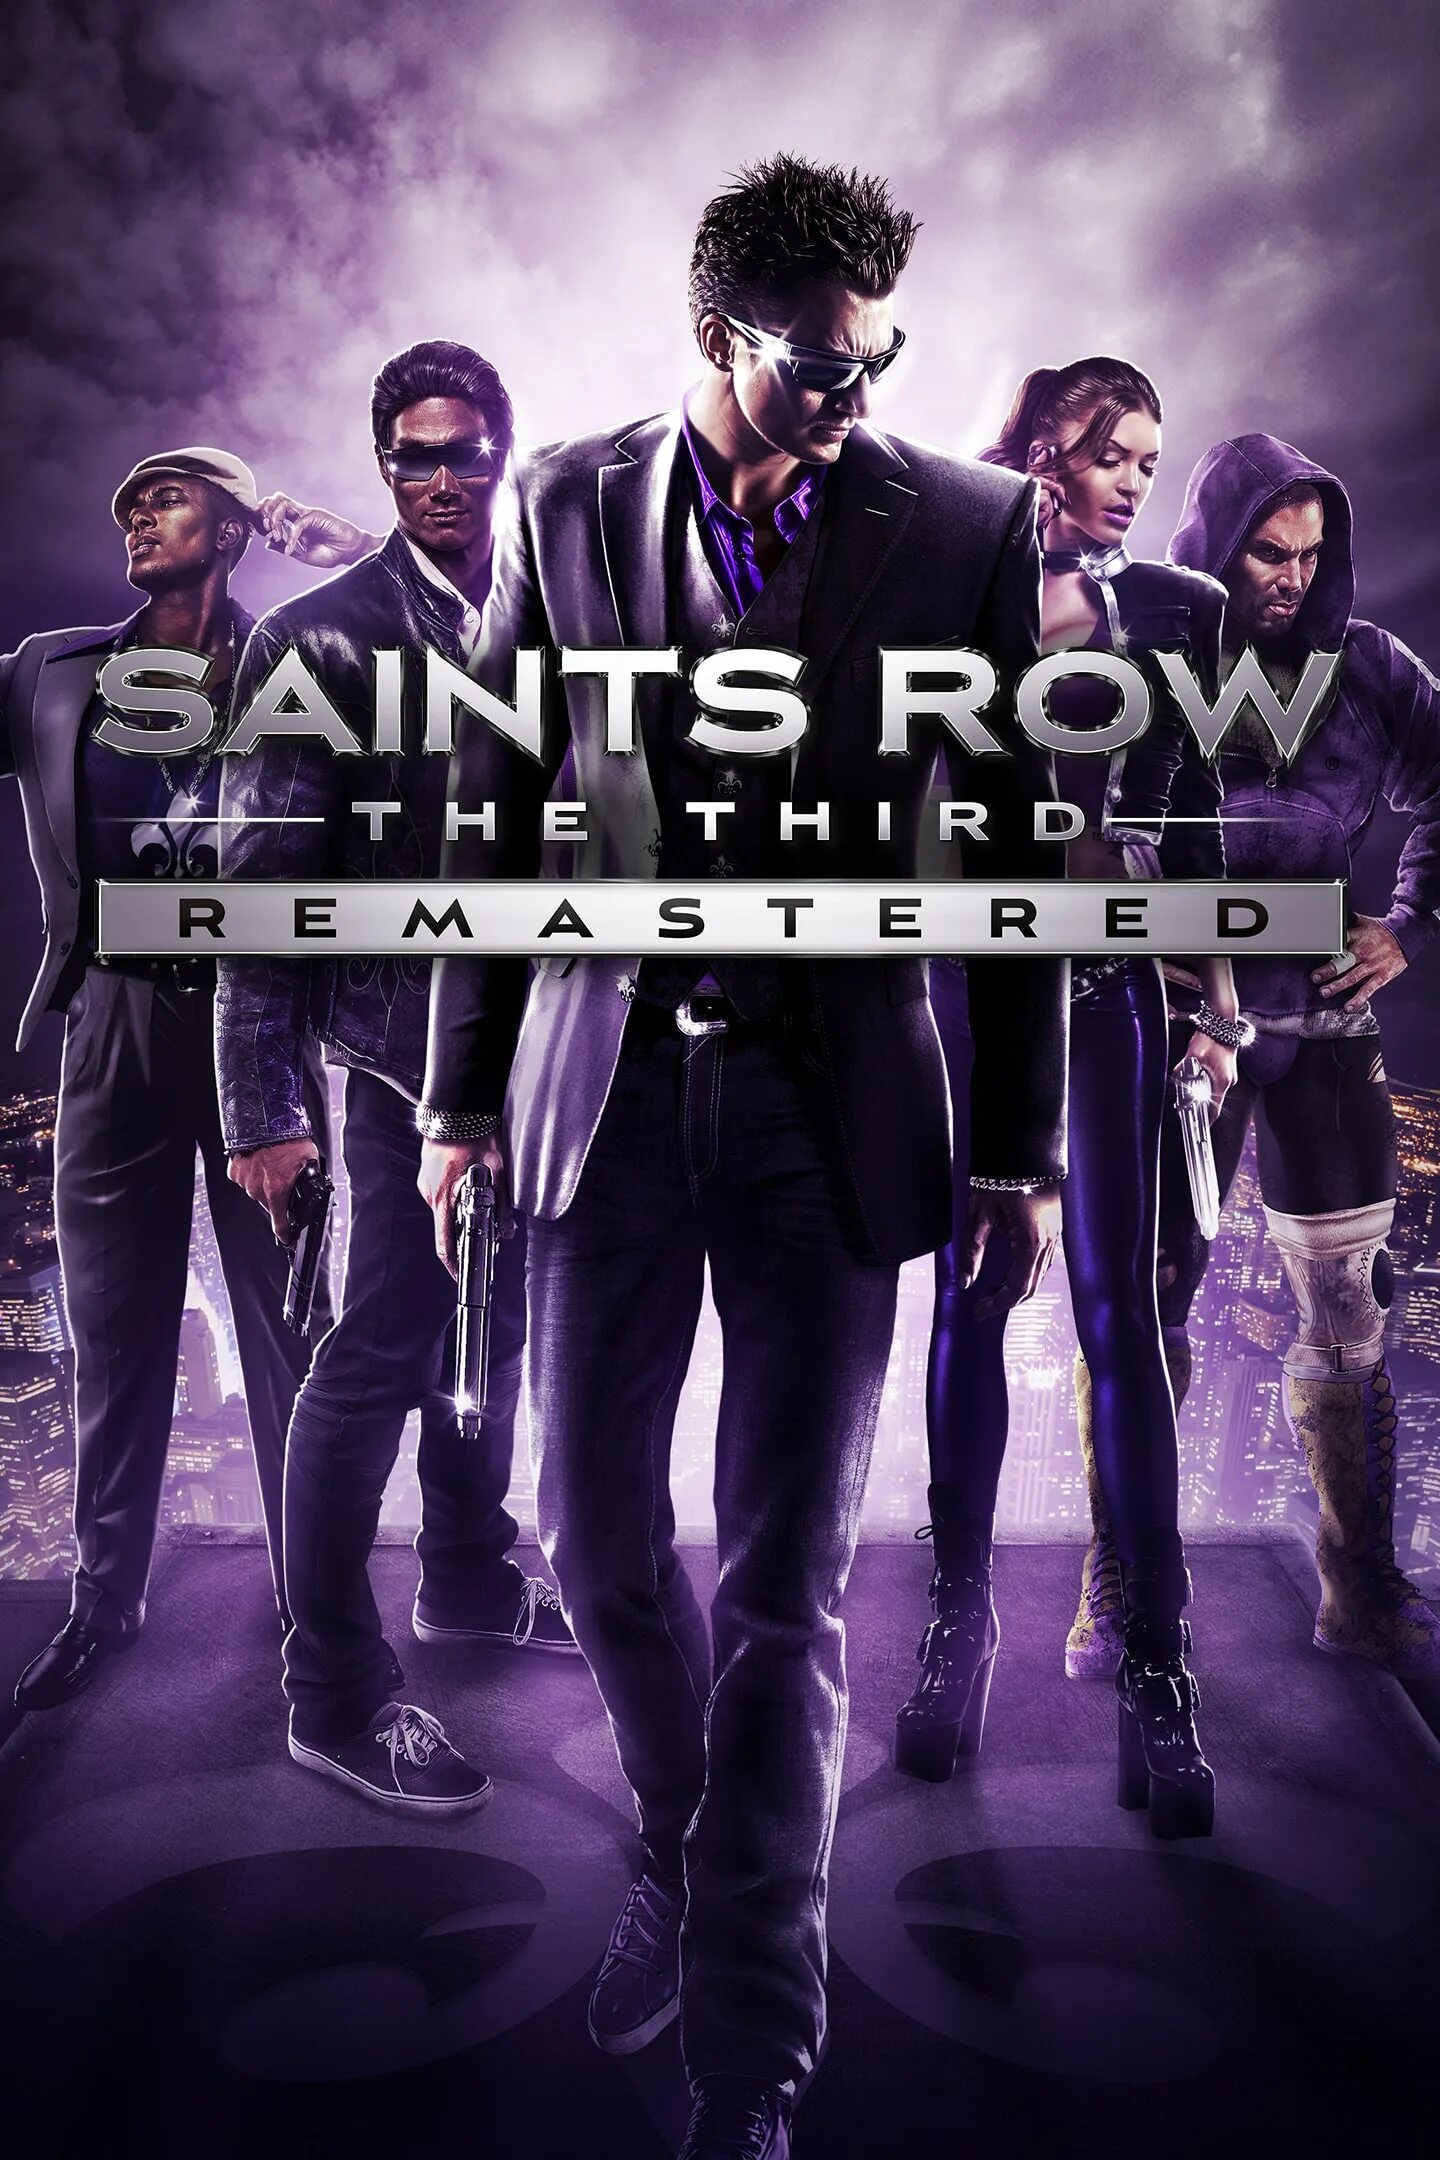 Saints row отзывы. Saints Row Remastered. Saints Row the third обложка. Saints Row the third Remastered. Saints Row the third Remastered обложка.